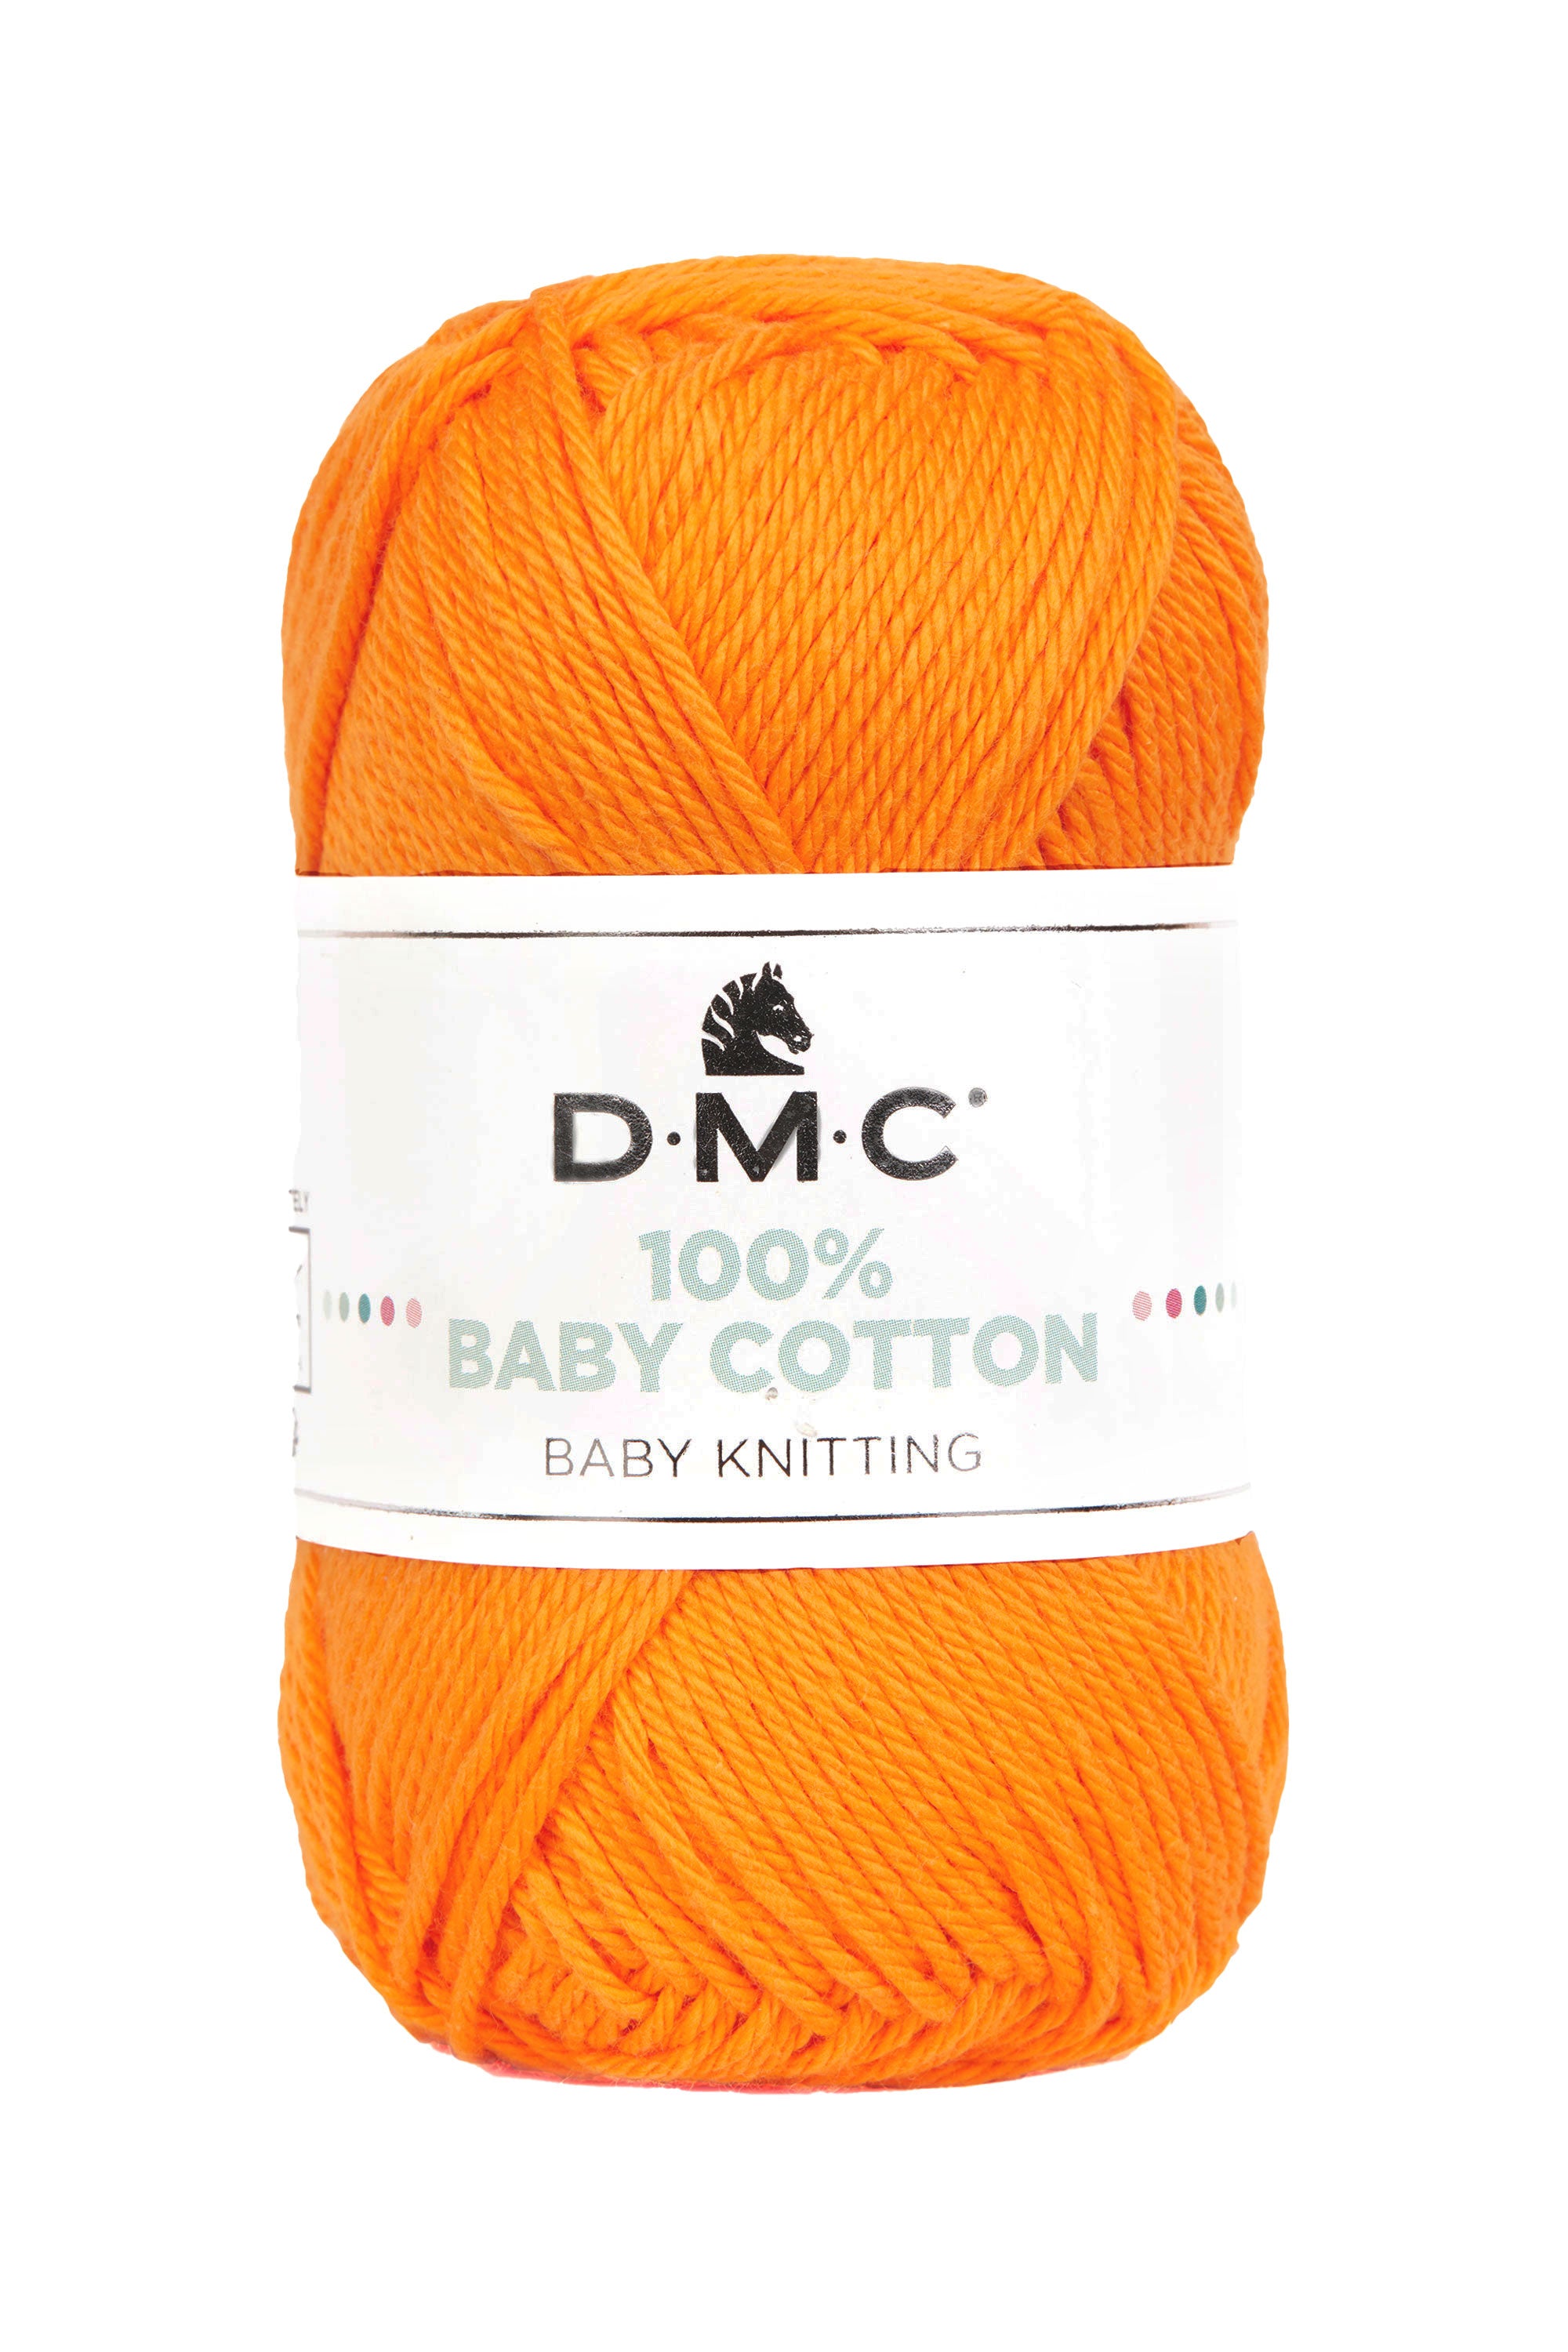 Lana Dmc 100% Baby Cotton Colore 792